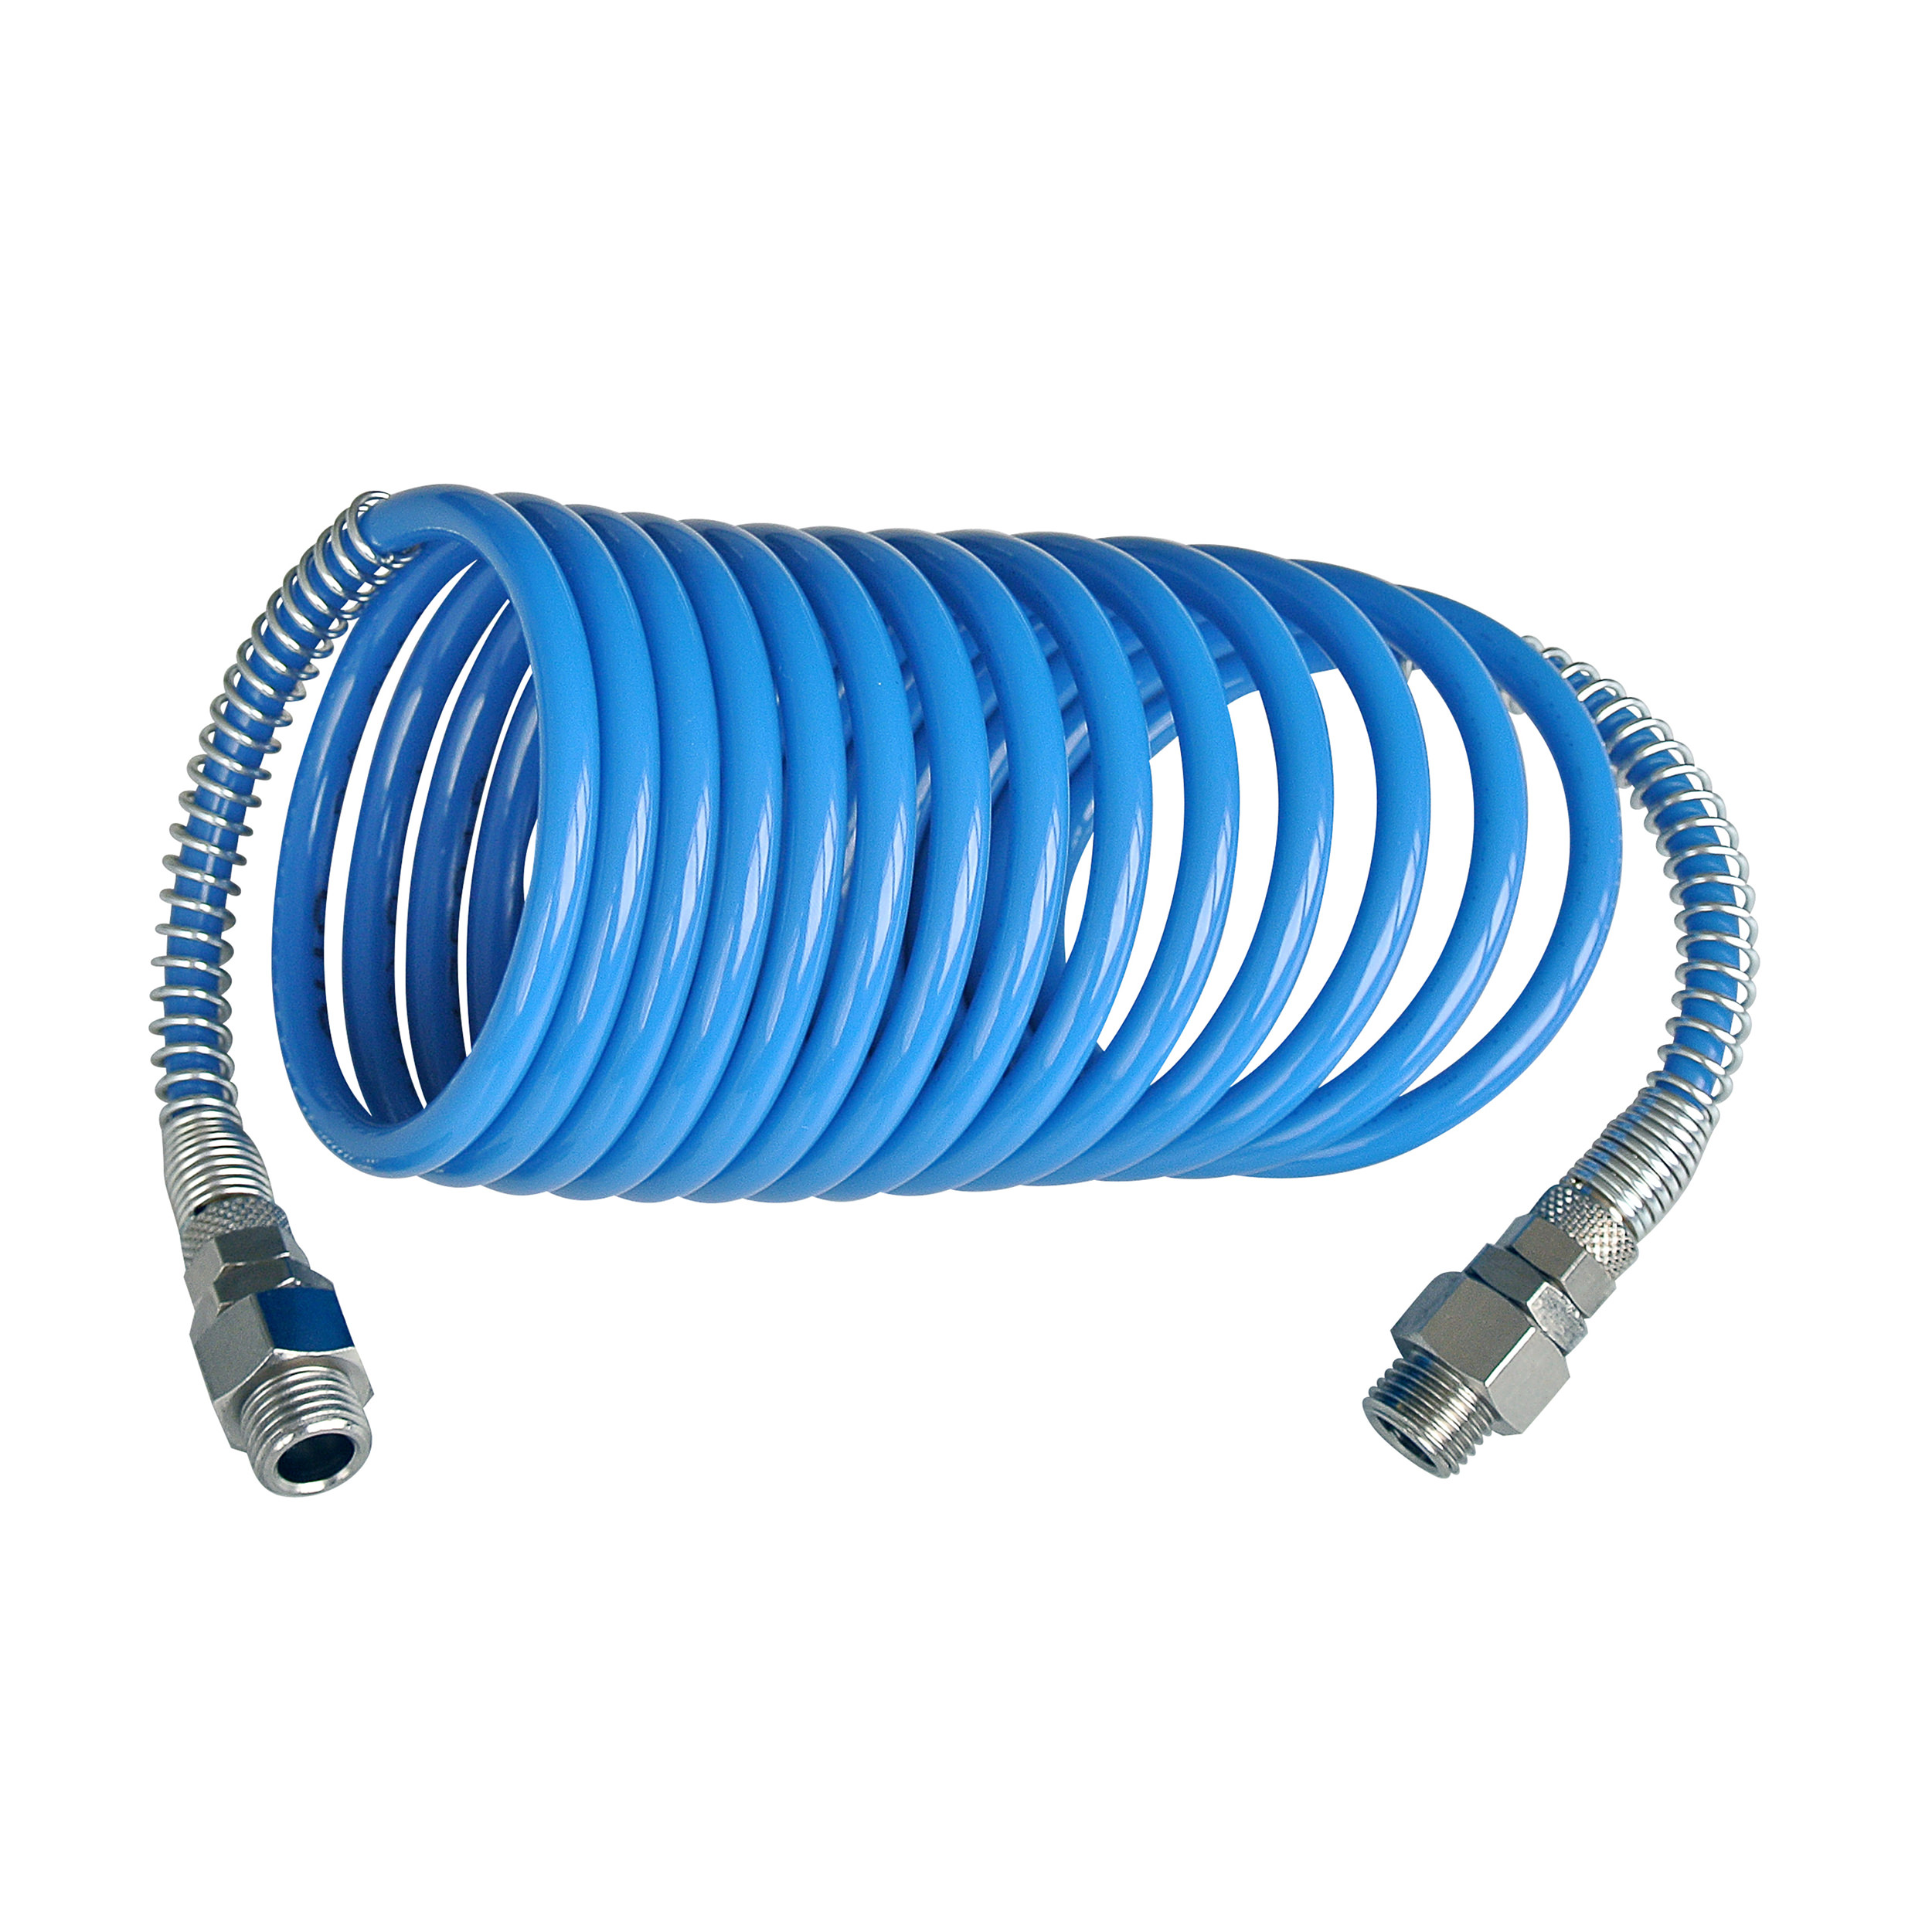 Spiral hose, polyamide 12, connection thread (zinc-plated brass)